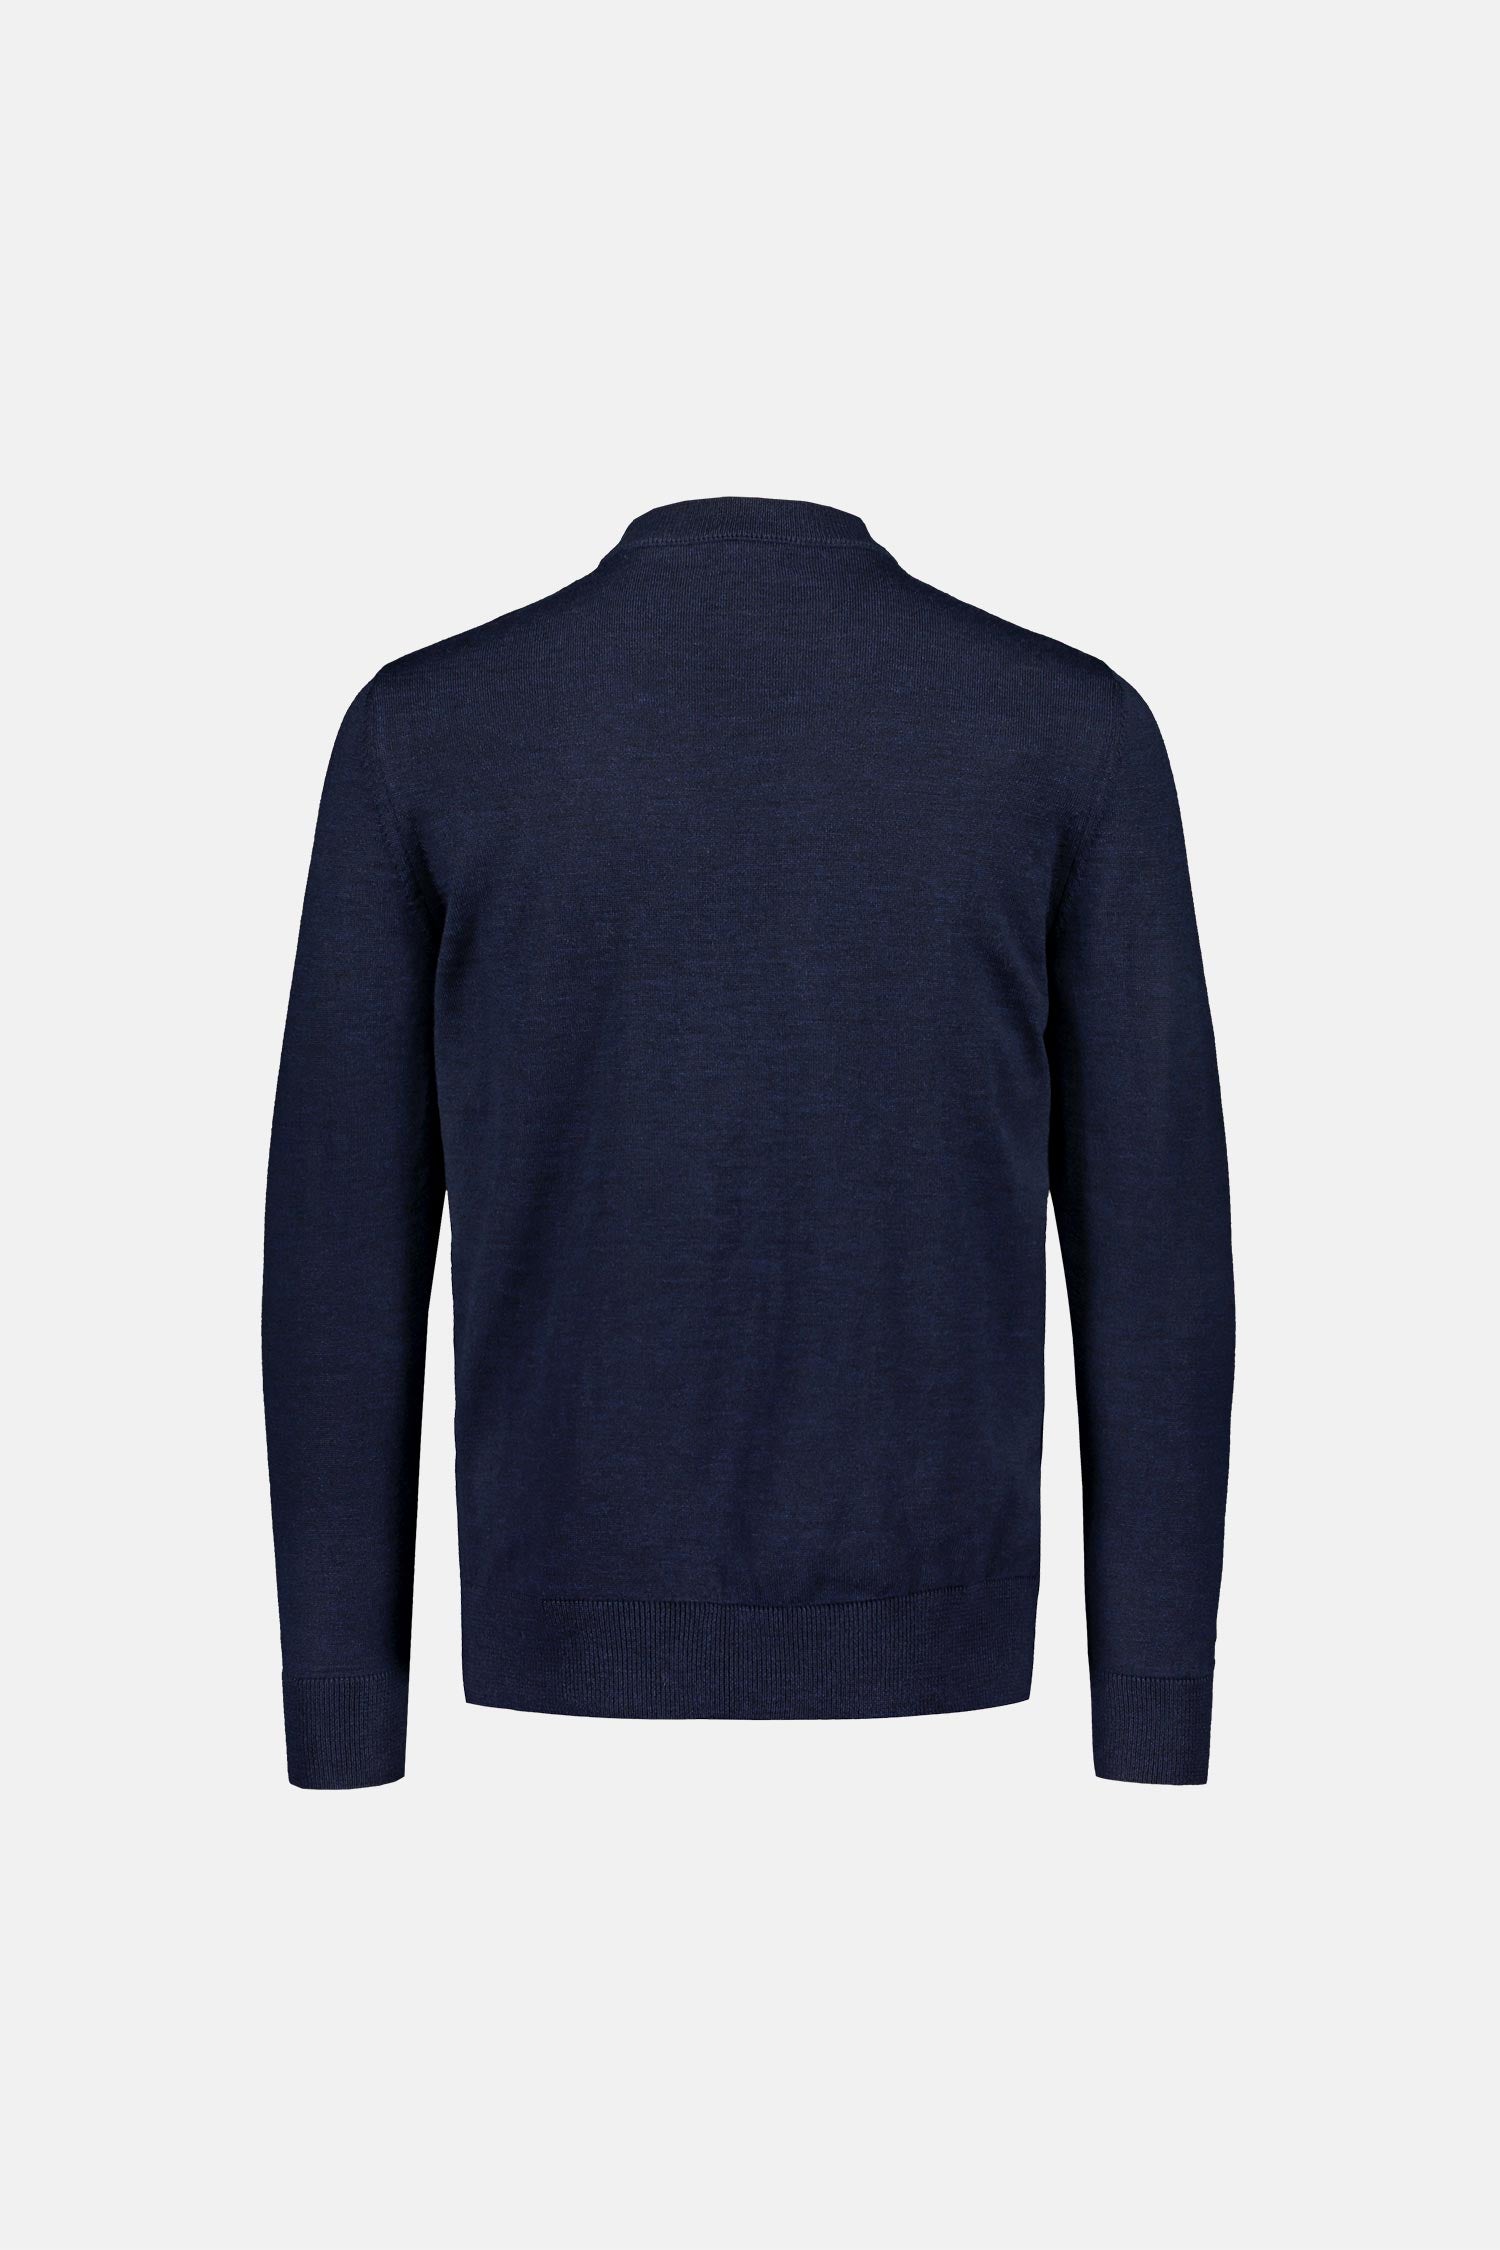 Frenn Daniel sustainable premium quality extra fine merino wool pullover blue